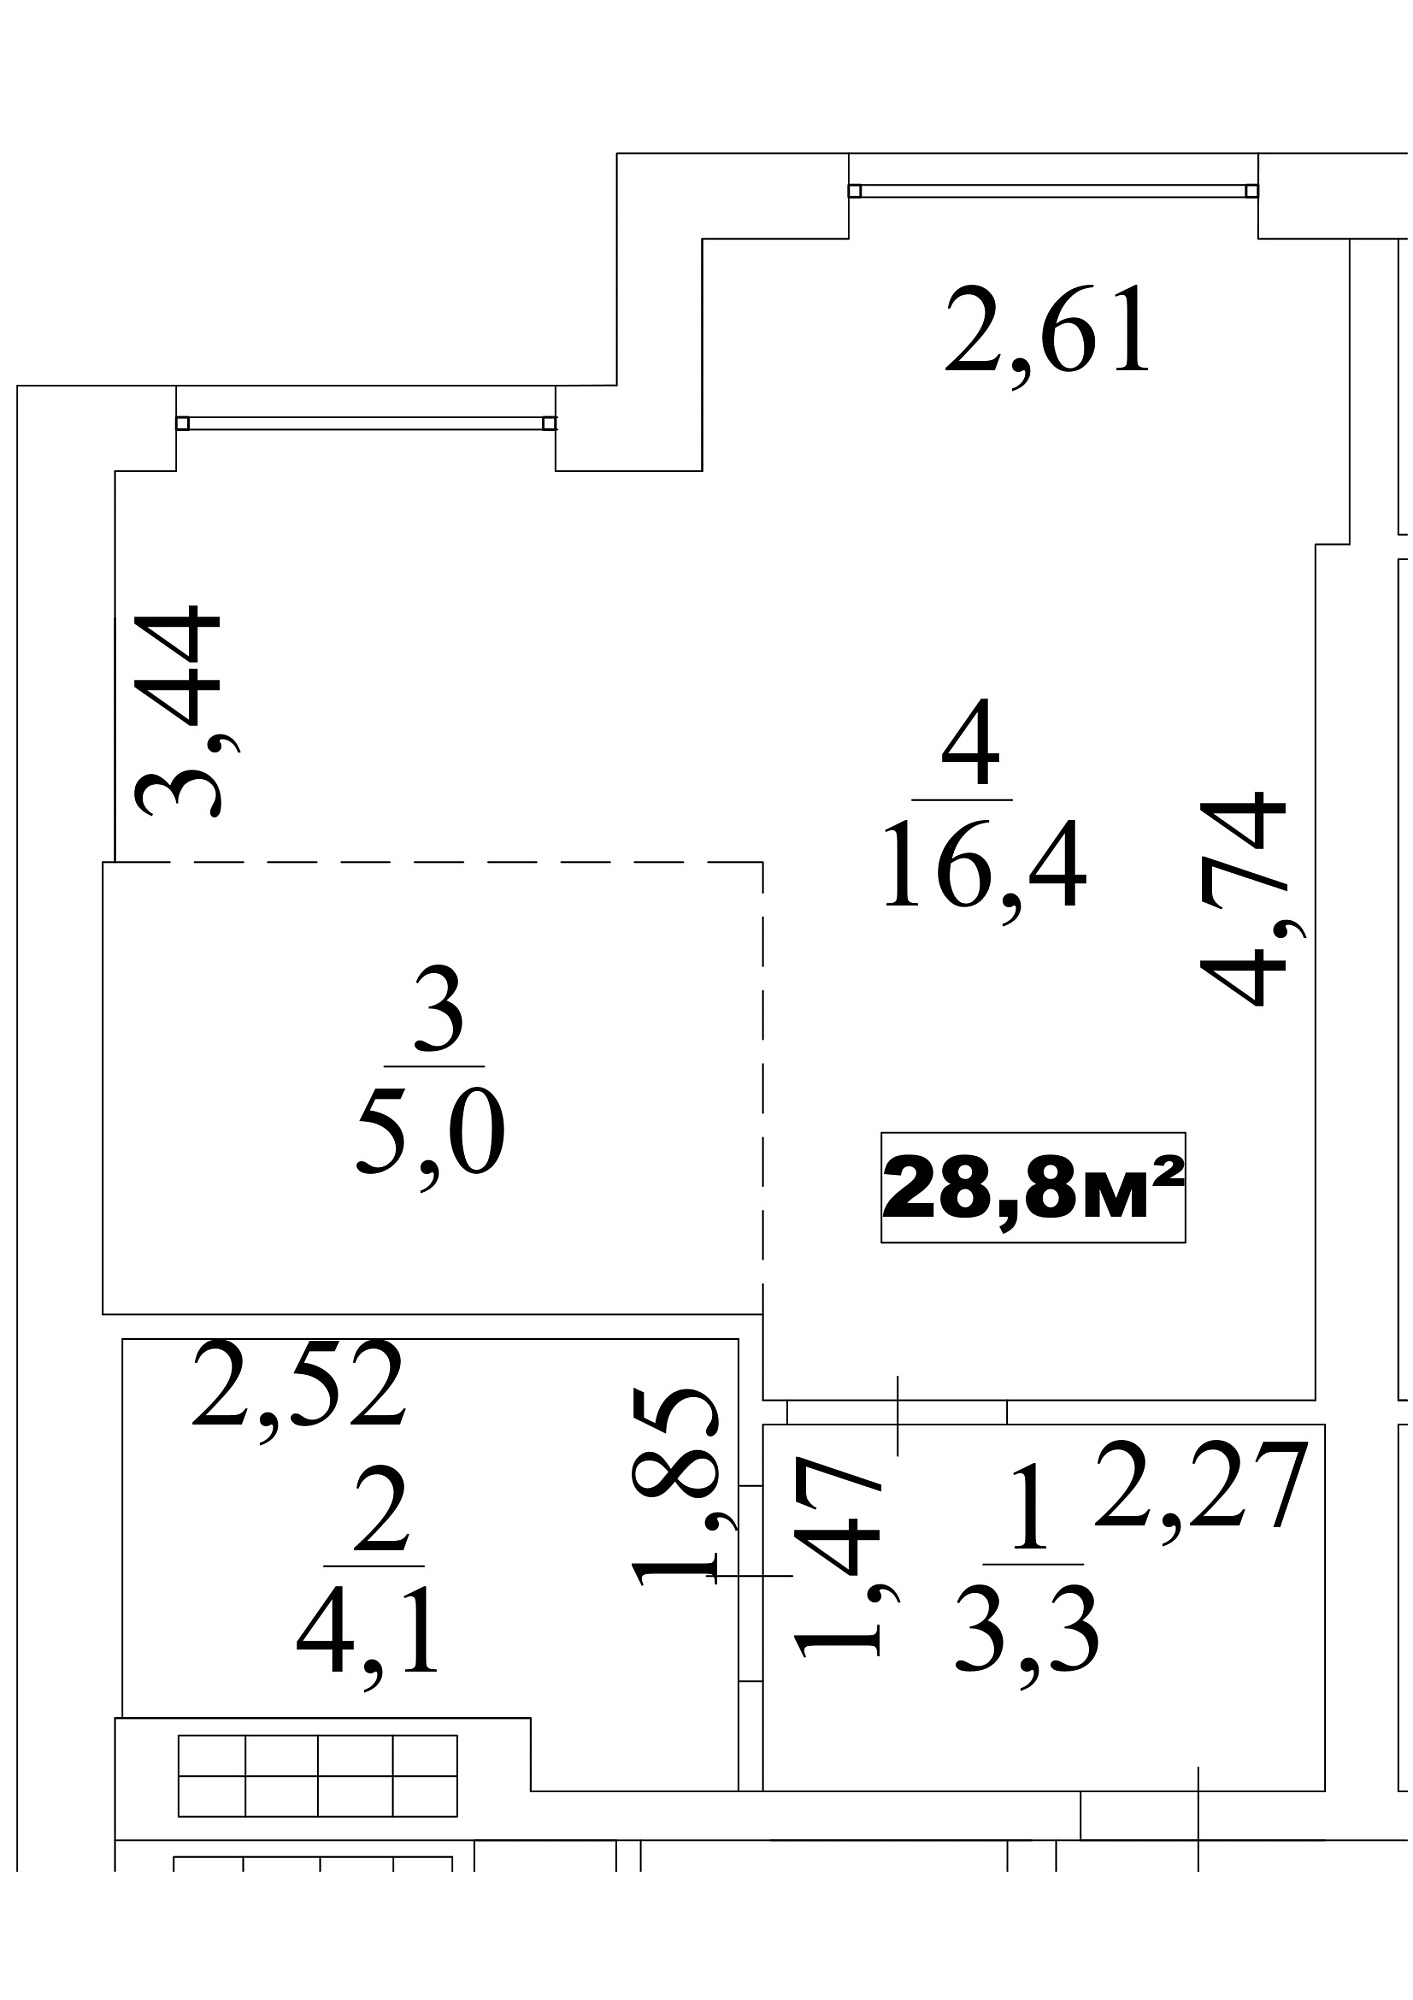 Планировка Smart-квартира площей 28.8м2, AB-10-03/0021б.